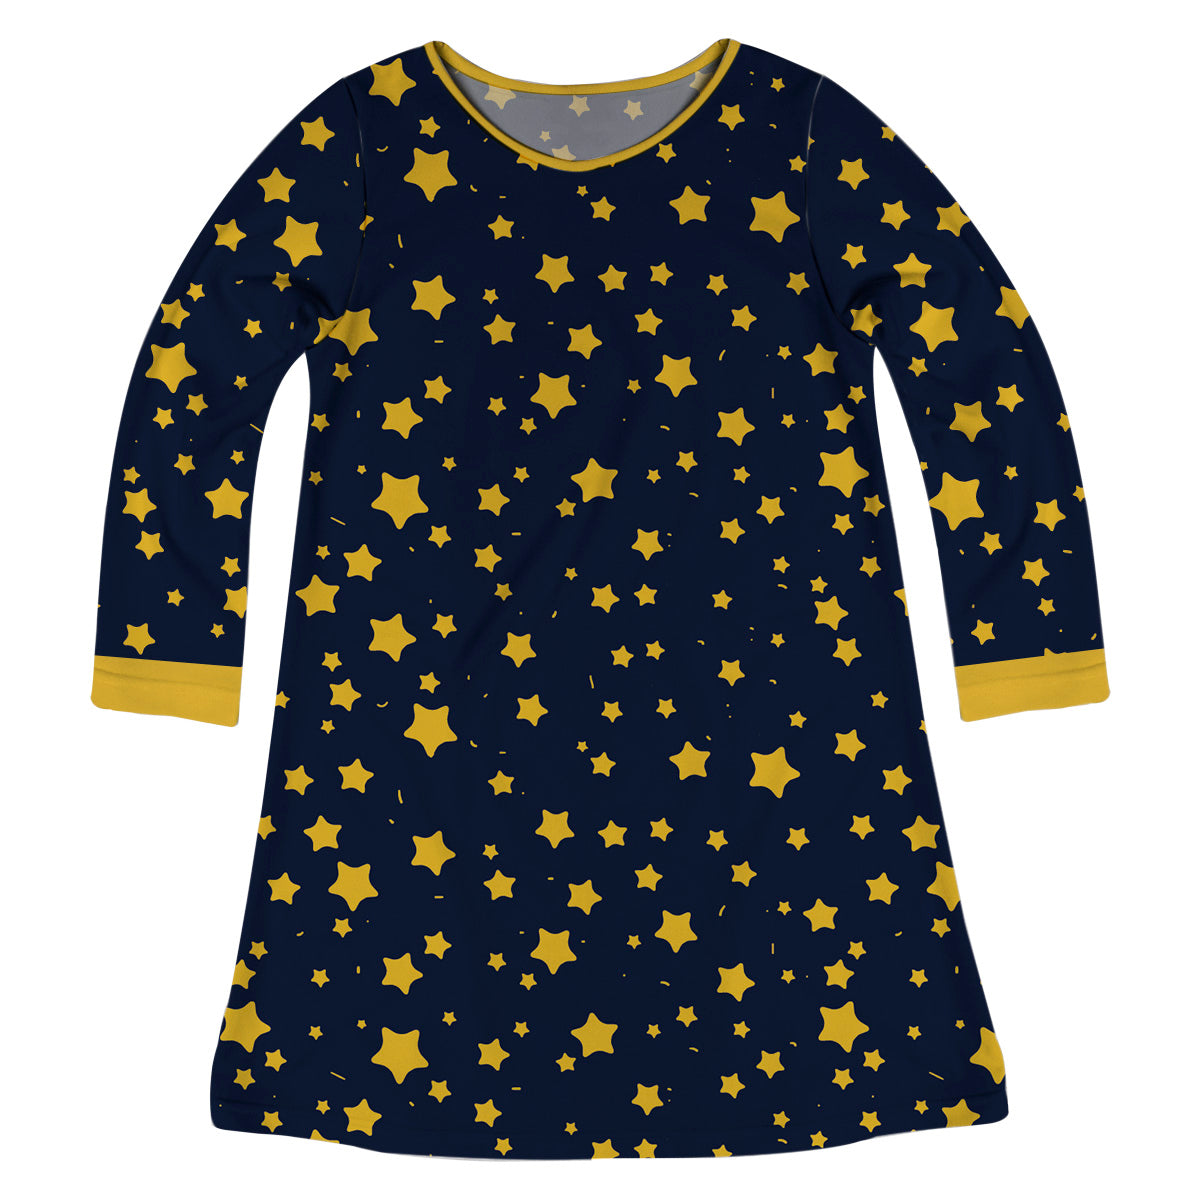 Girls blue stars dress - Wimziy&Co.